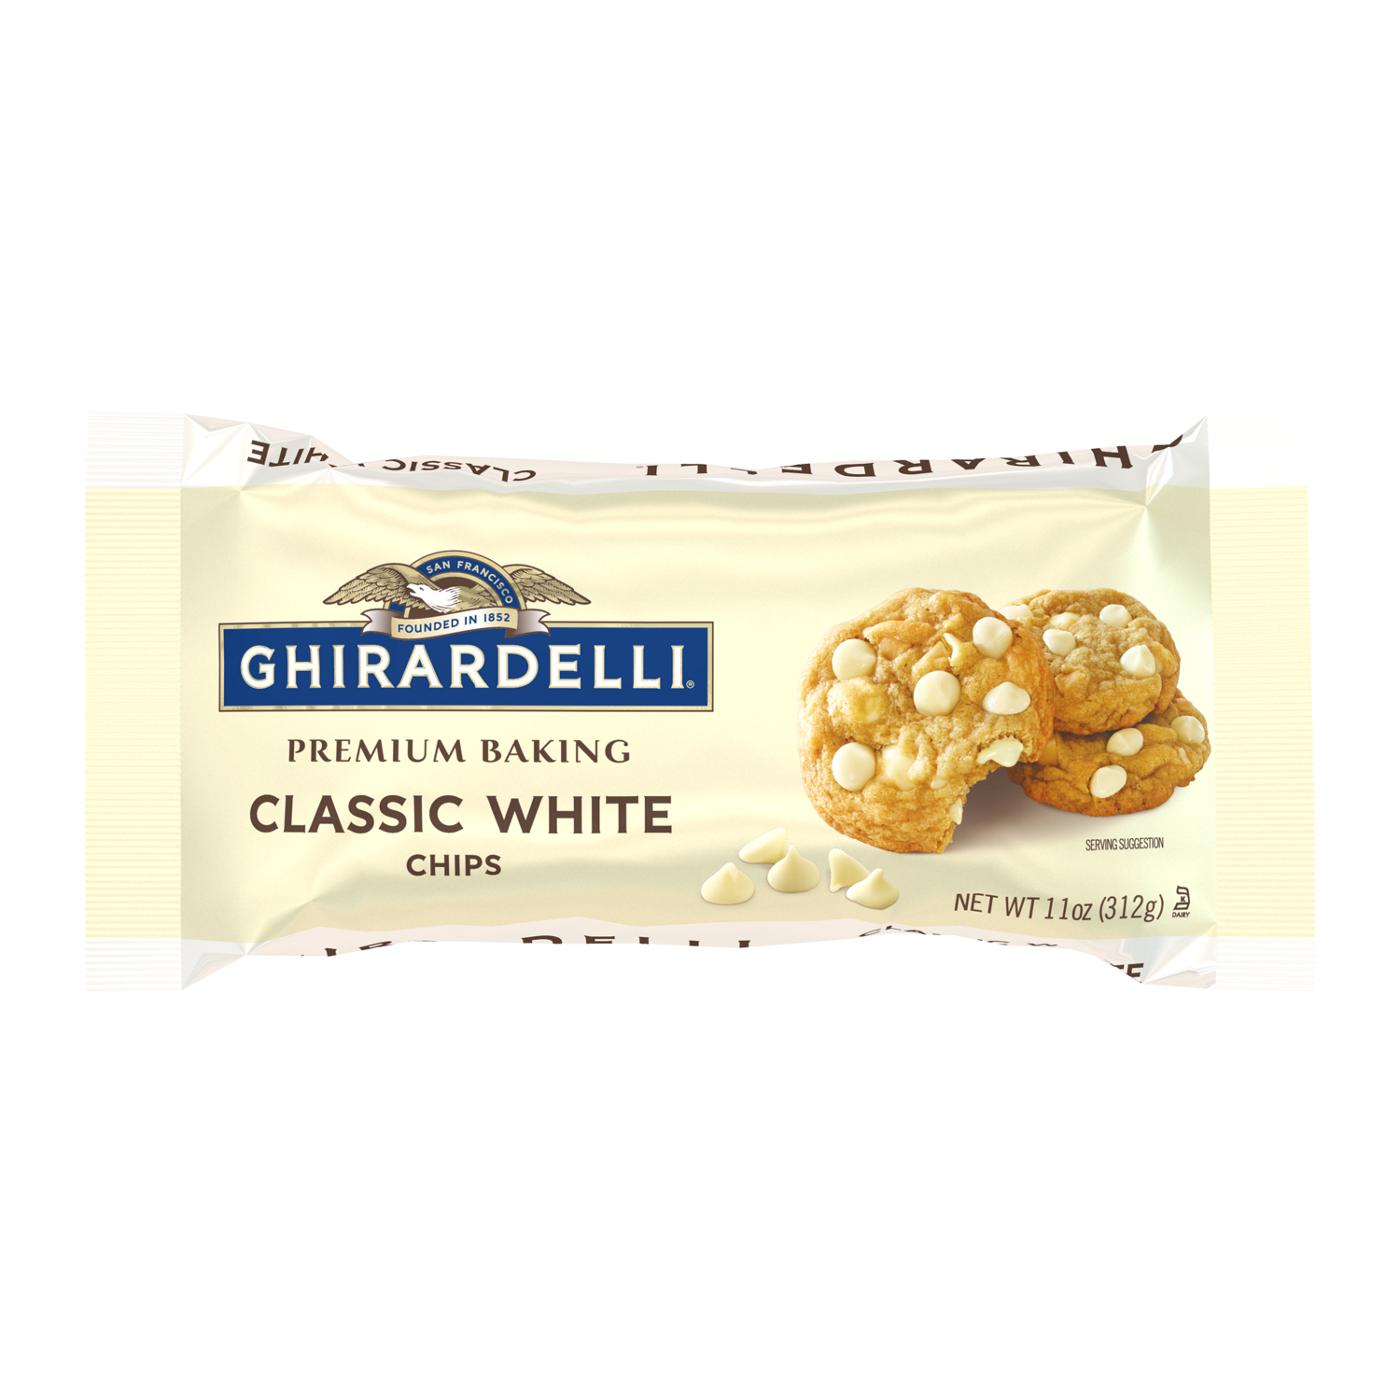 Ghirardelli Classic White Premium Baking Chips; image 1 of 6